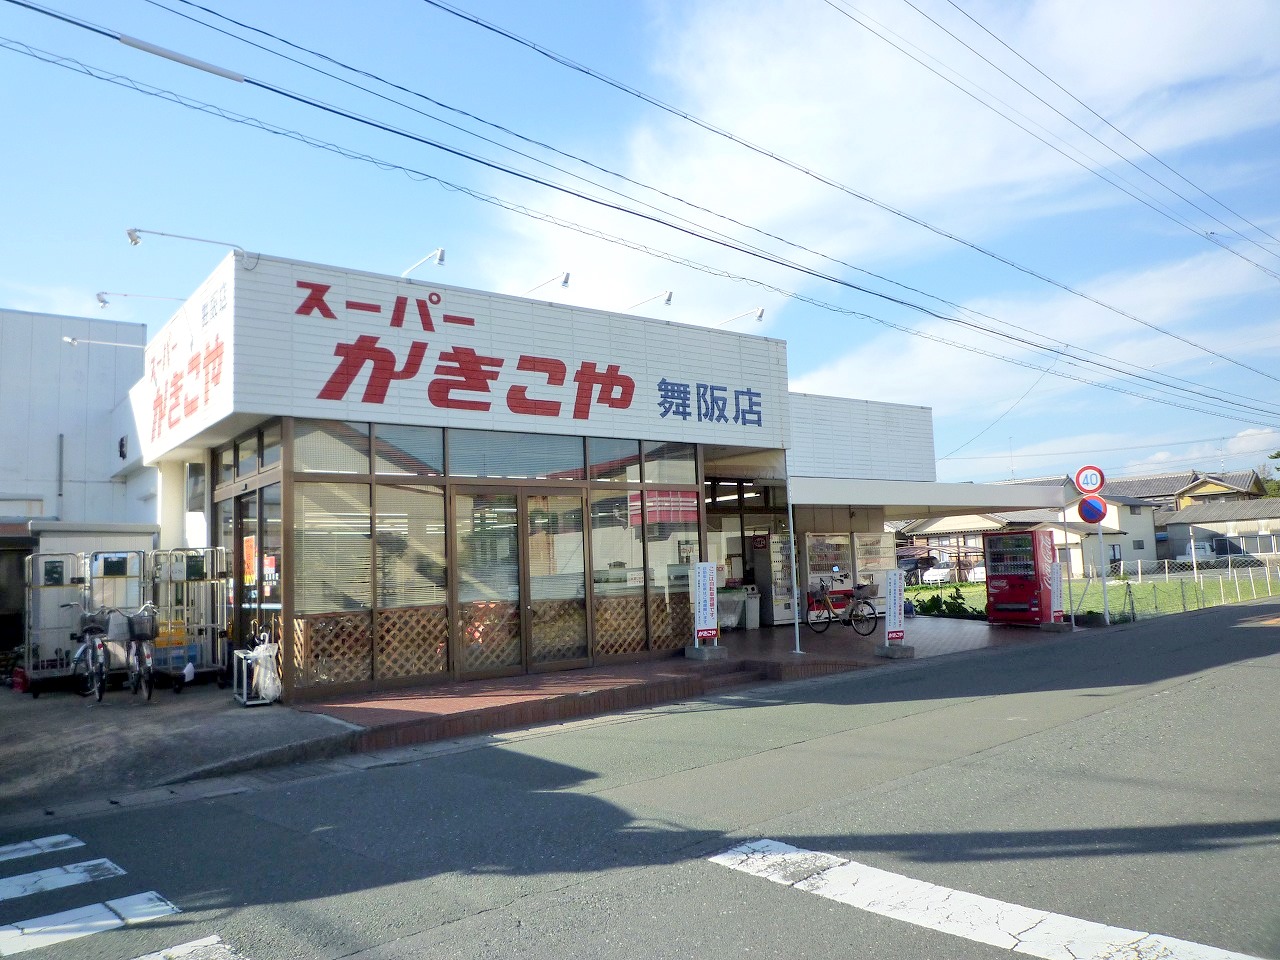 Supermarket. Kakiko and Maisaka store up to (super) 802m